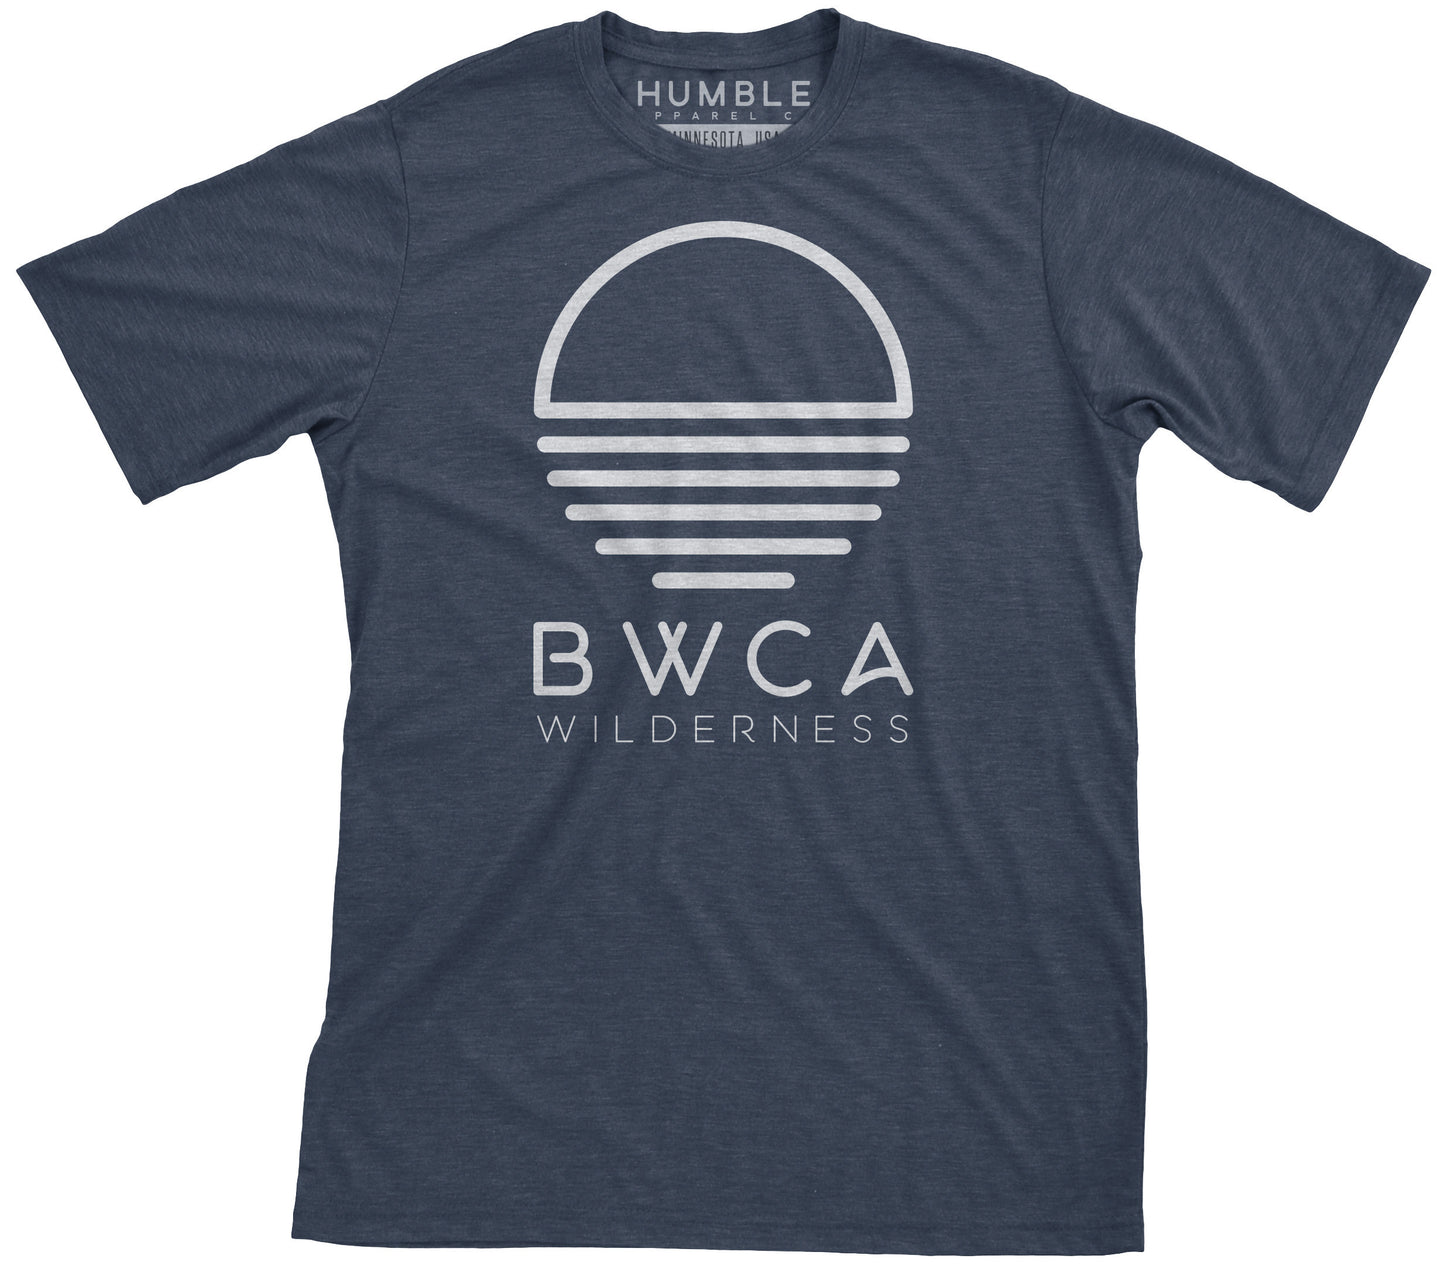 BWCA Sunset Wilderness T-Shirt - Midnight Navy - Humble Apparel Co 